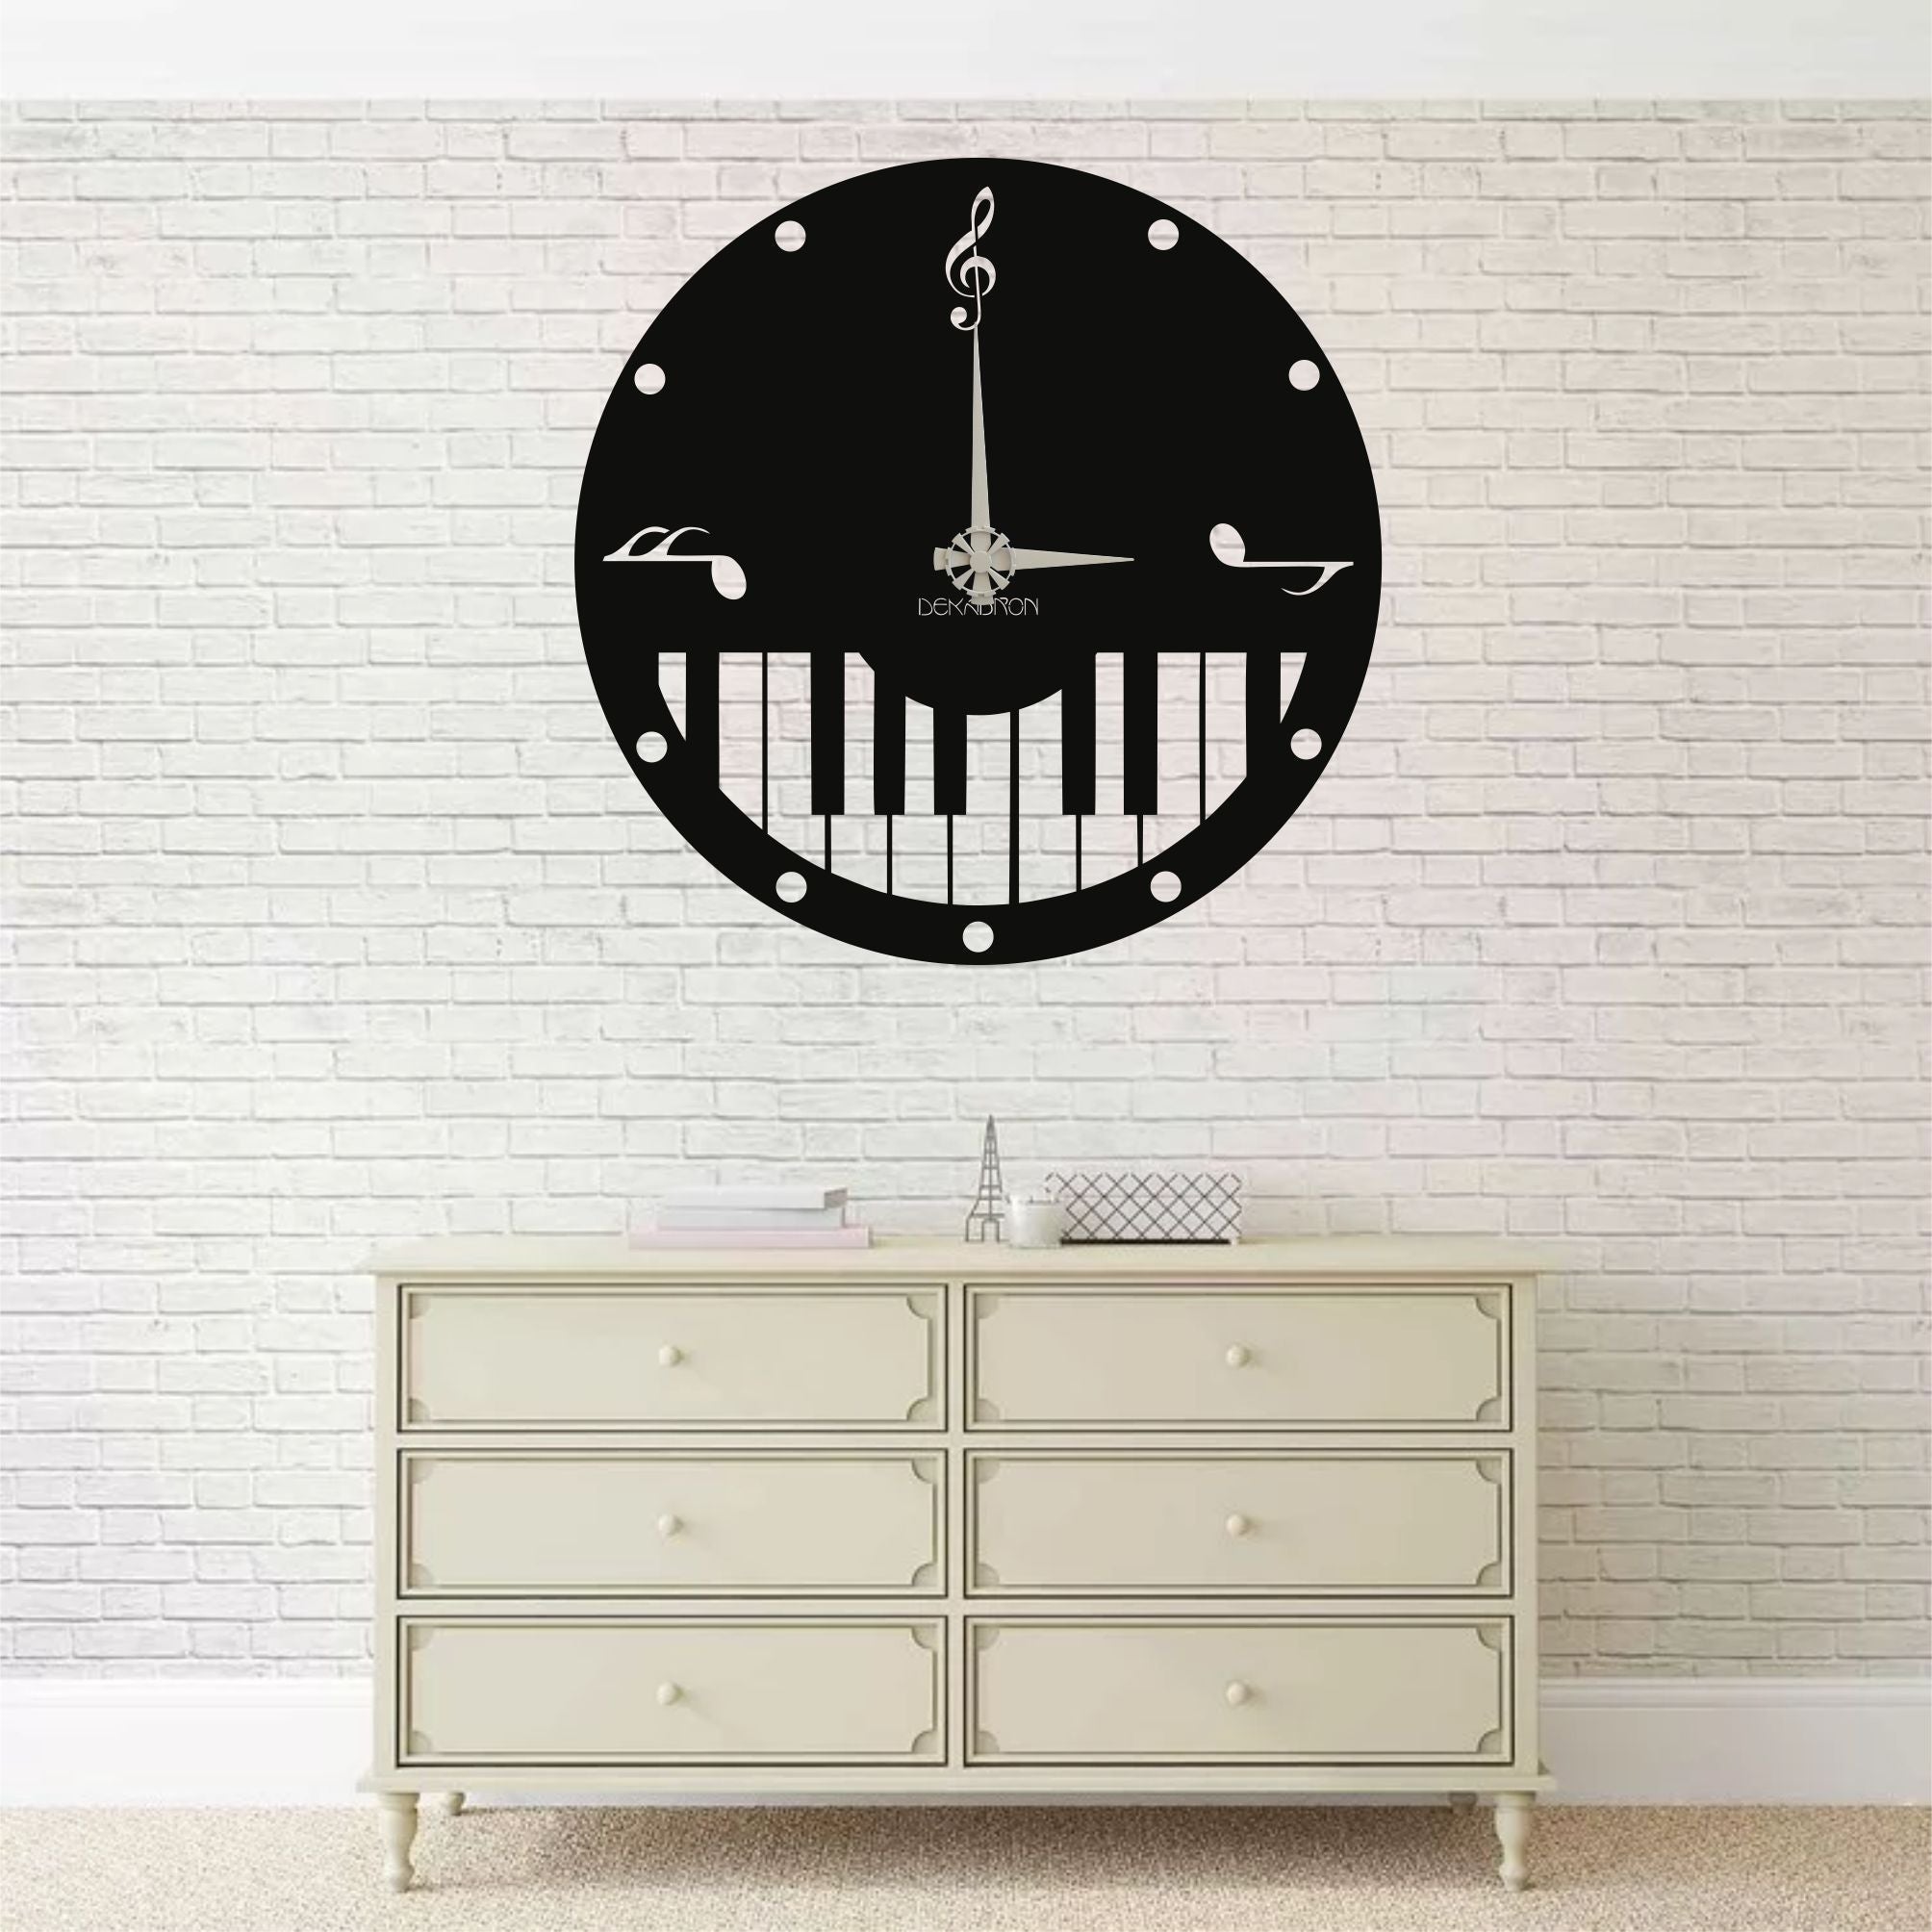 Piano And Music Notes Metal Wall Clock